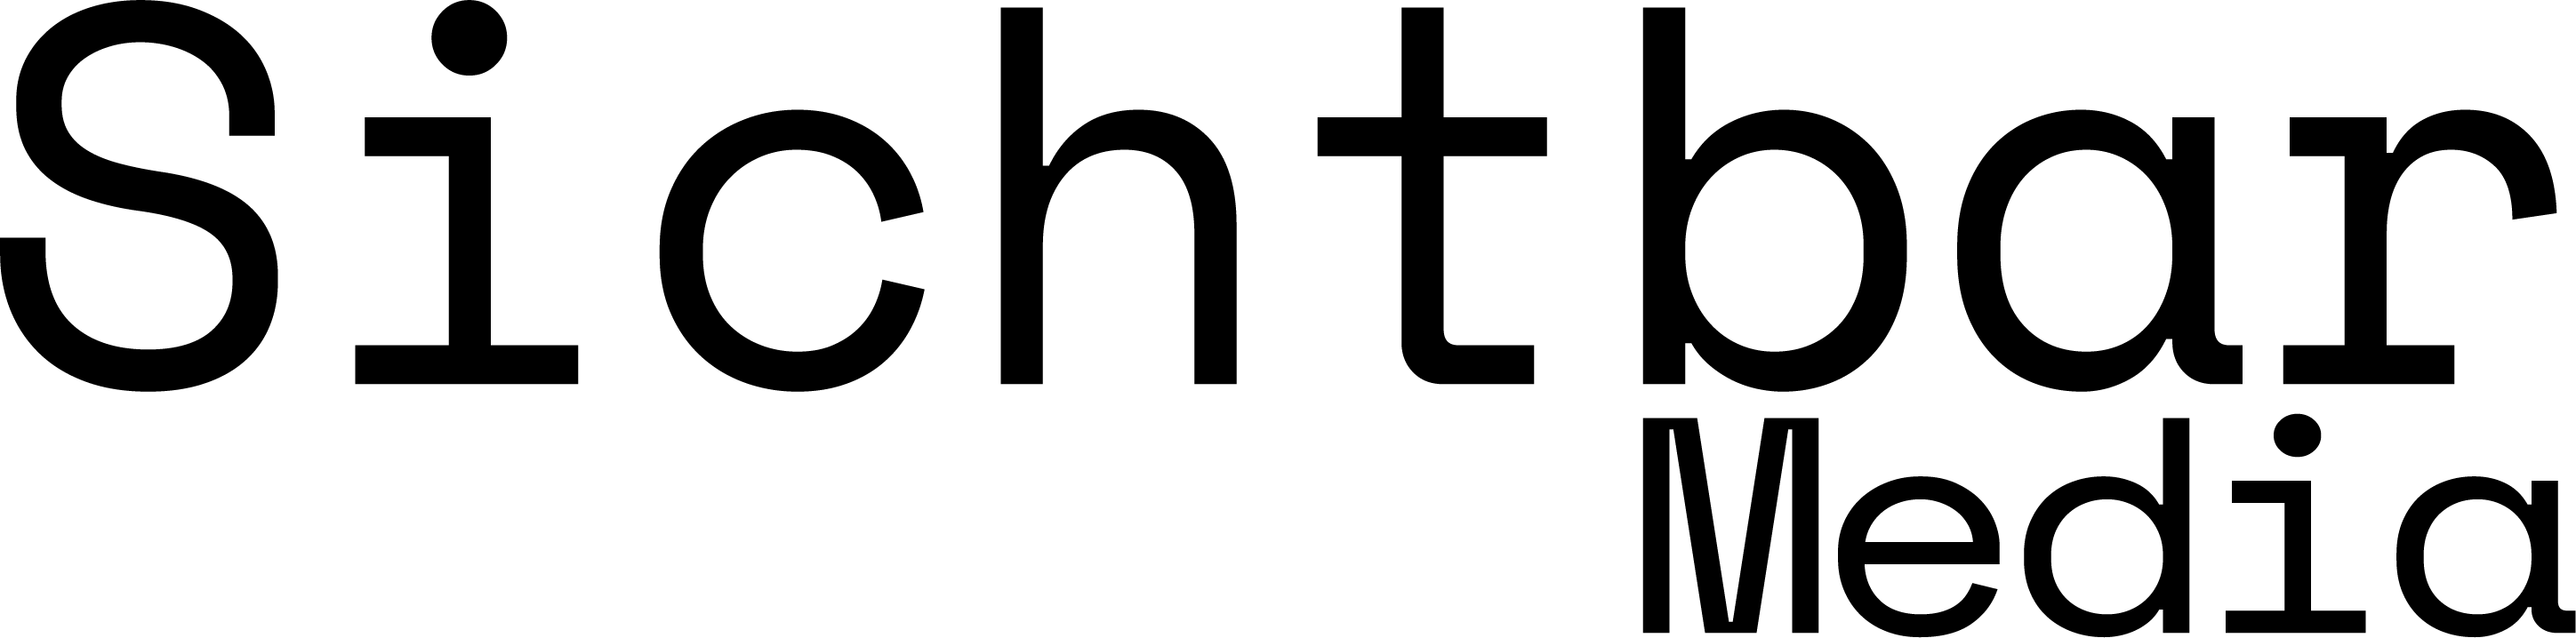 sichtbar-media-logo-text